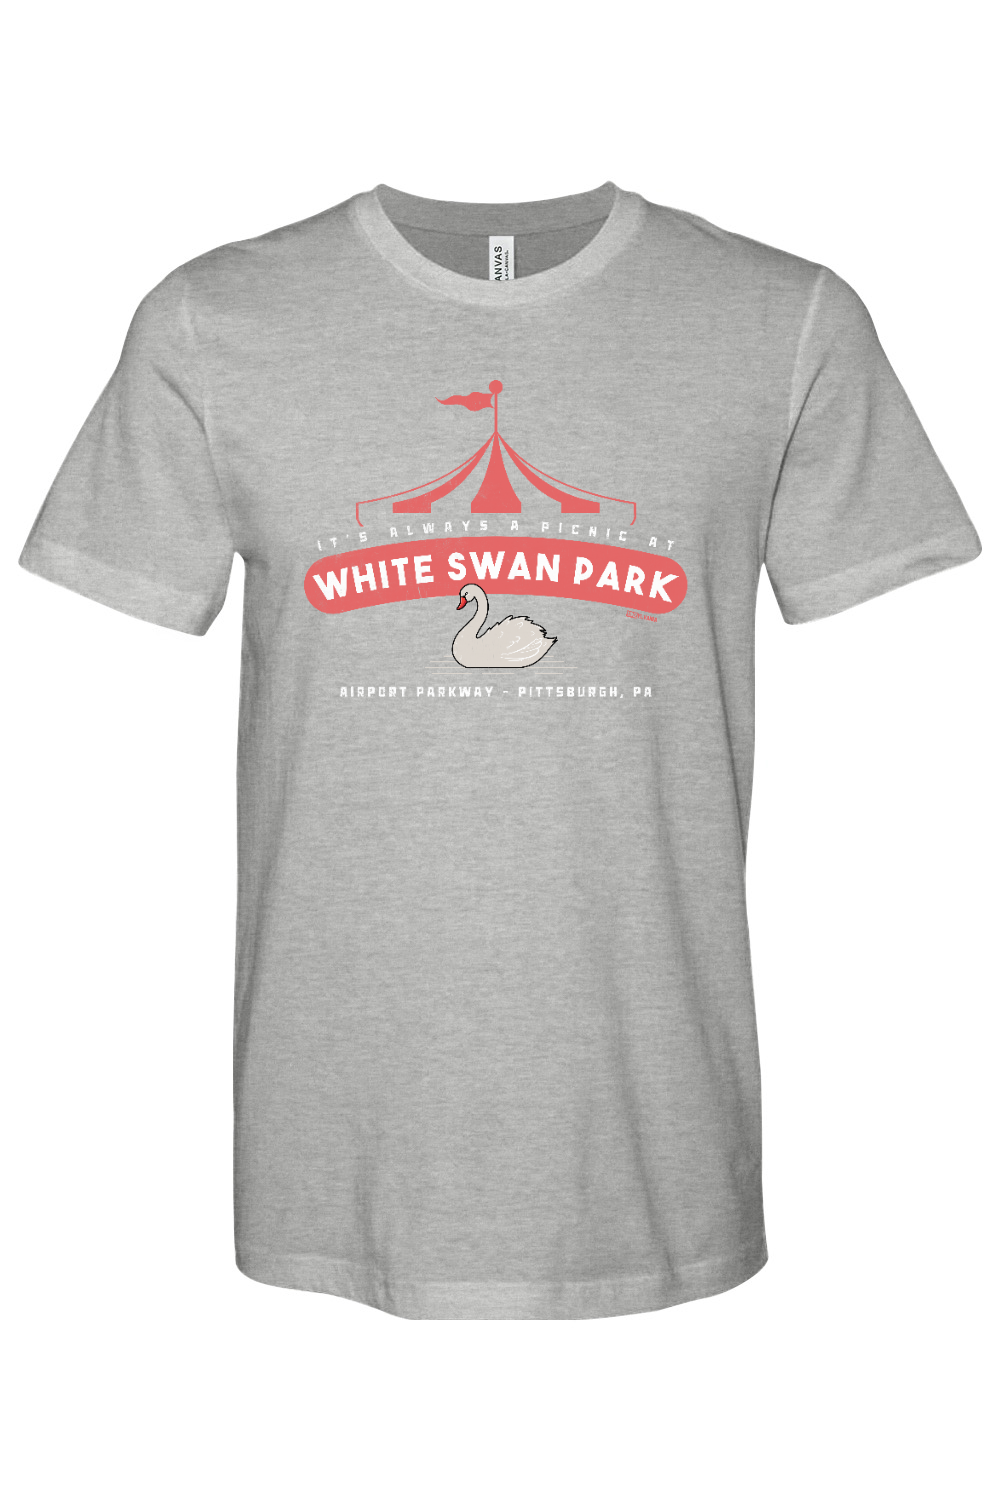 White Swan Park - Bella + Canvas Heathered Jersey Tee - Yinzylvania